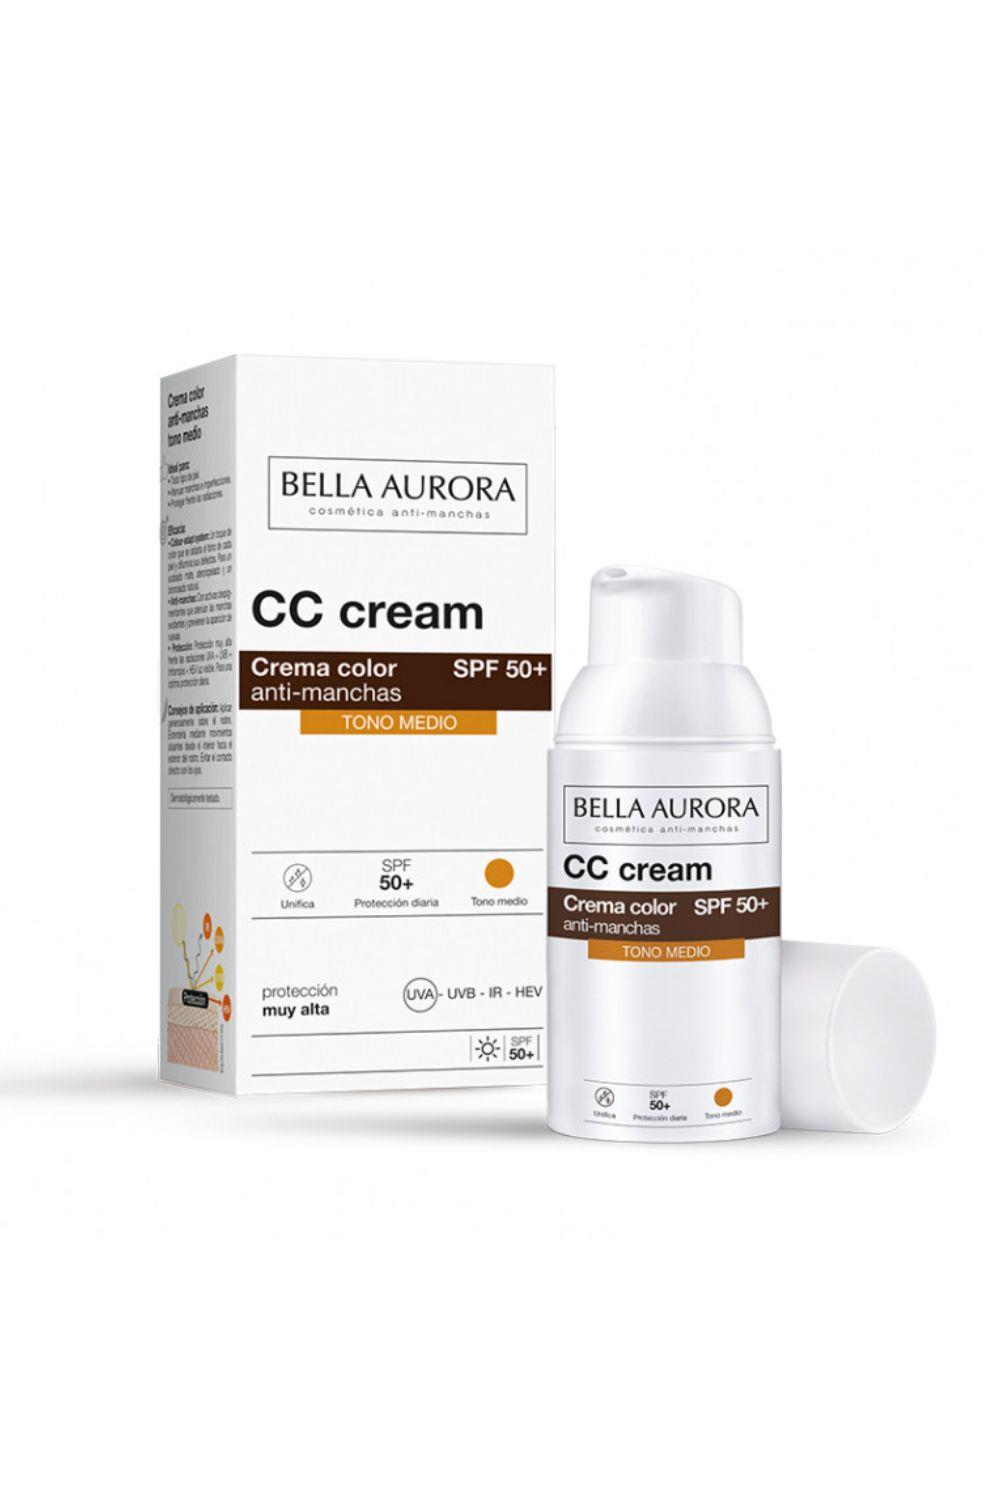 Bella Aurora Crema Facial con Color SPF 50+ CC Cream | Protector Solar Anti-Manchas | Piel Normal o Seca, Tono Medio, 30 ml